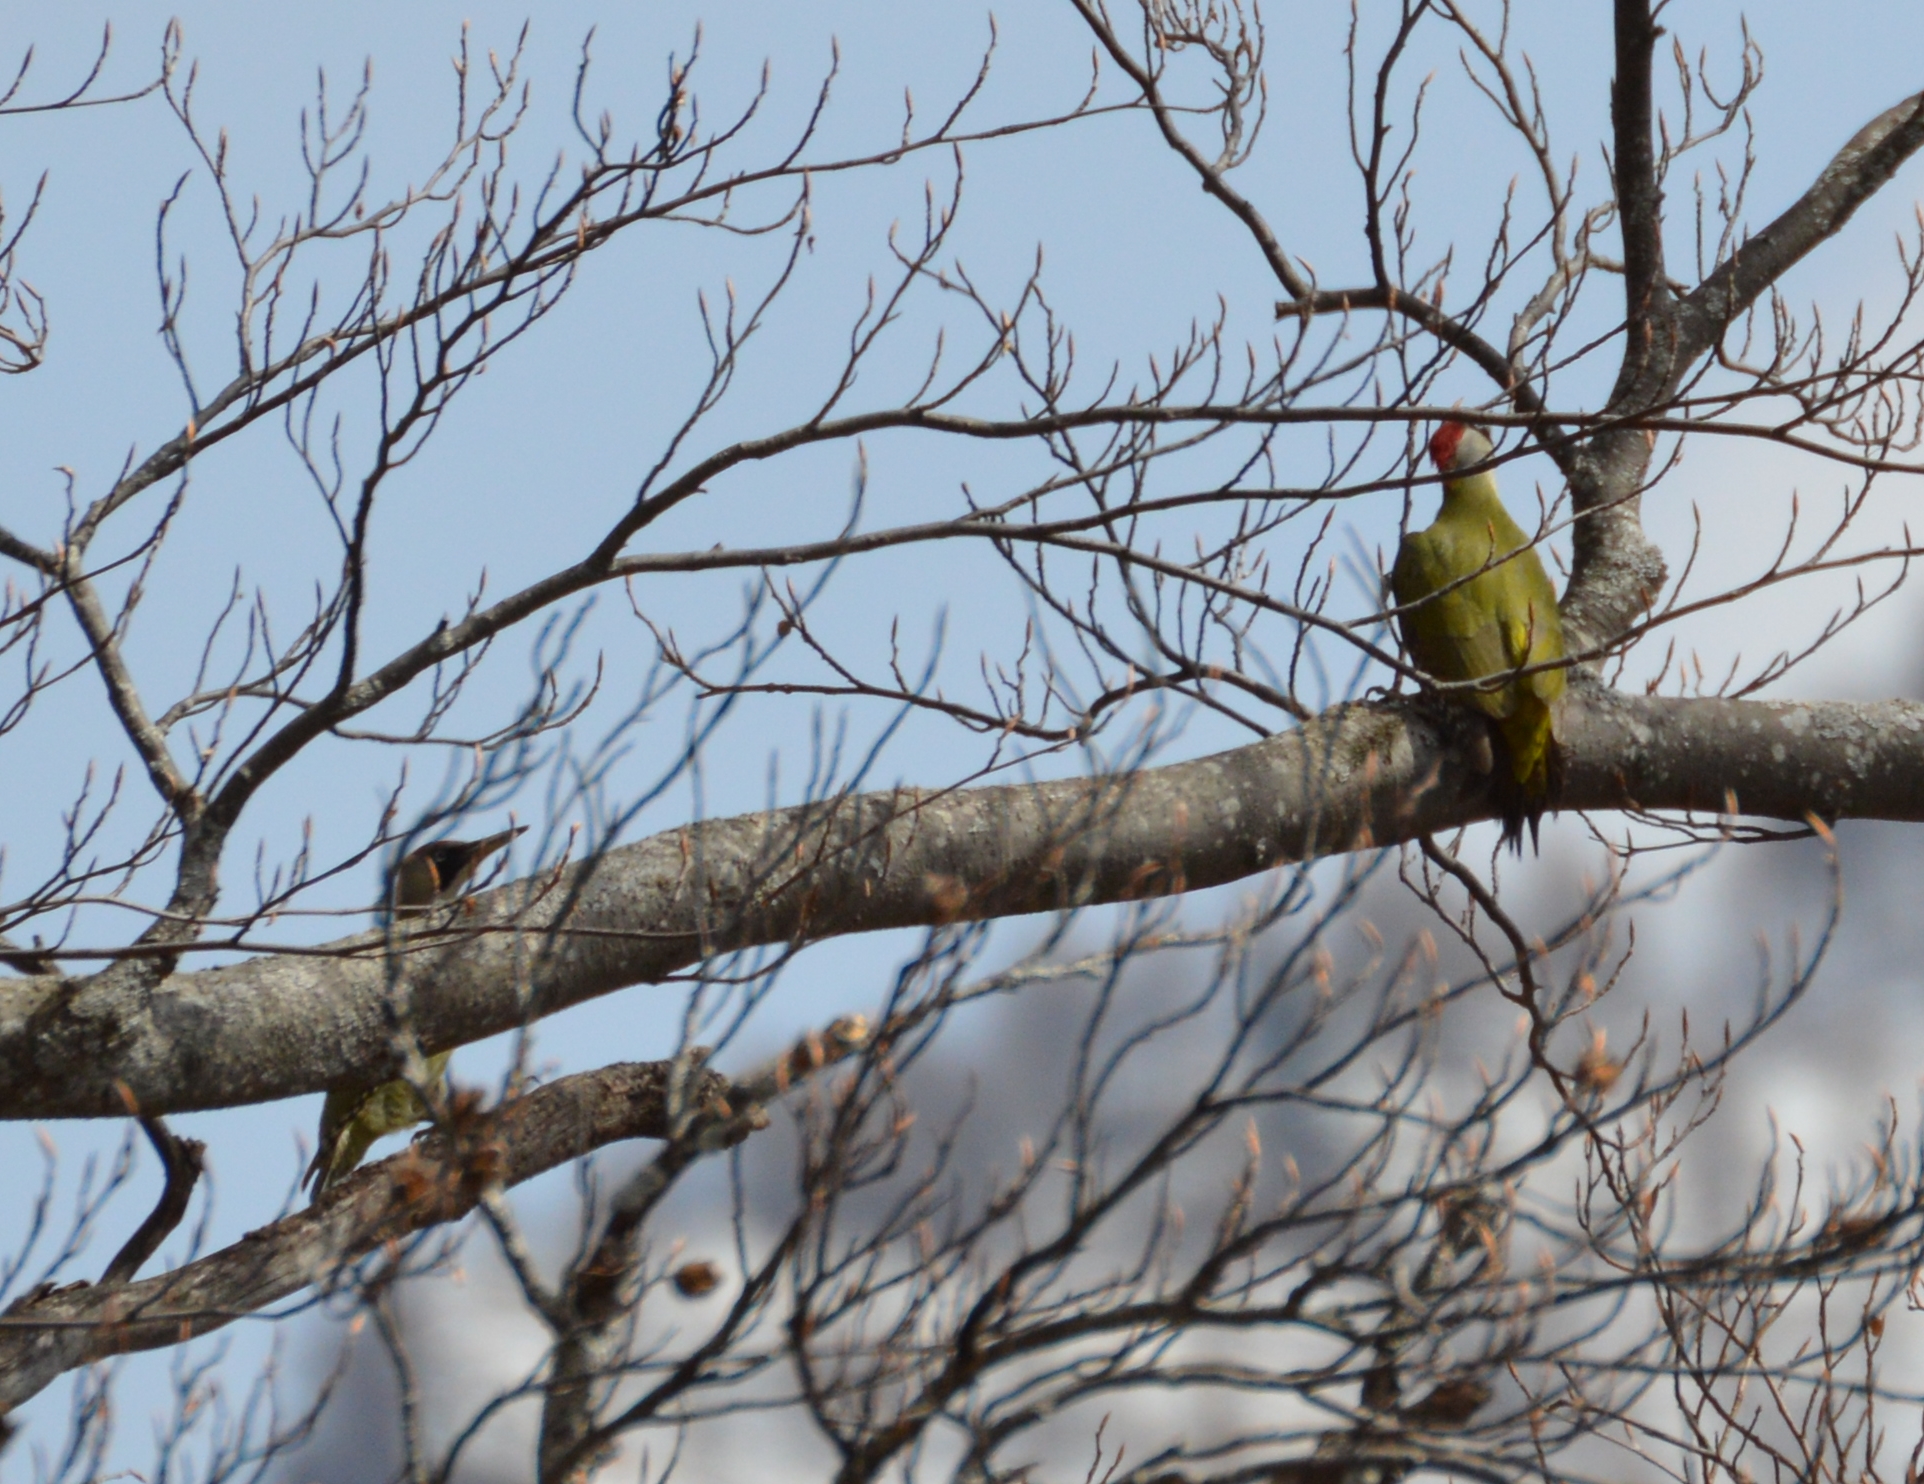 green woodpecker in courtship...